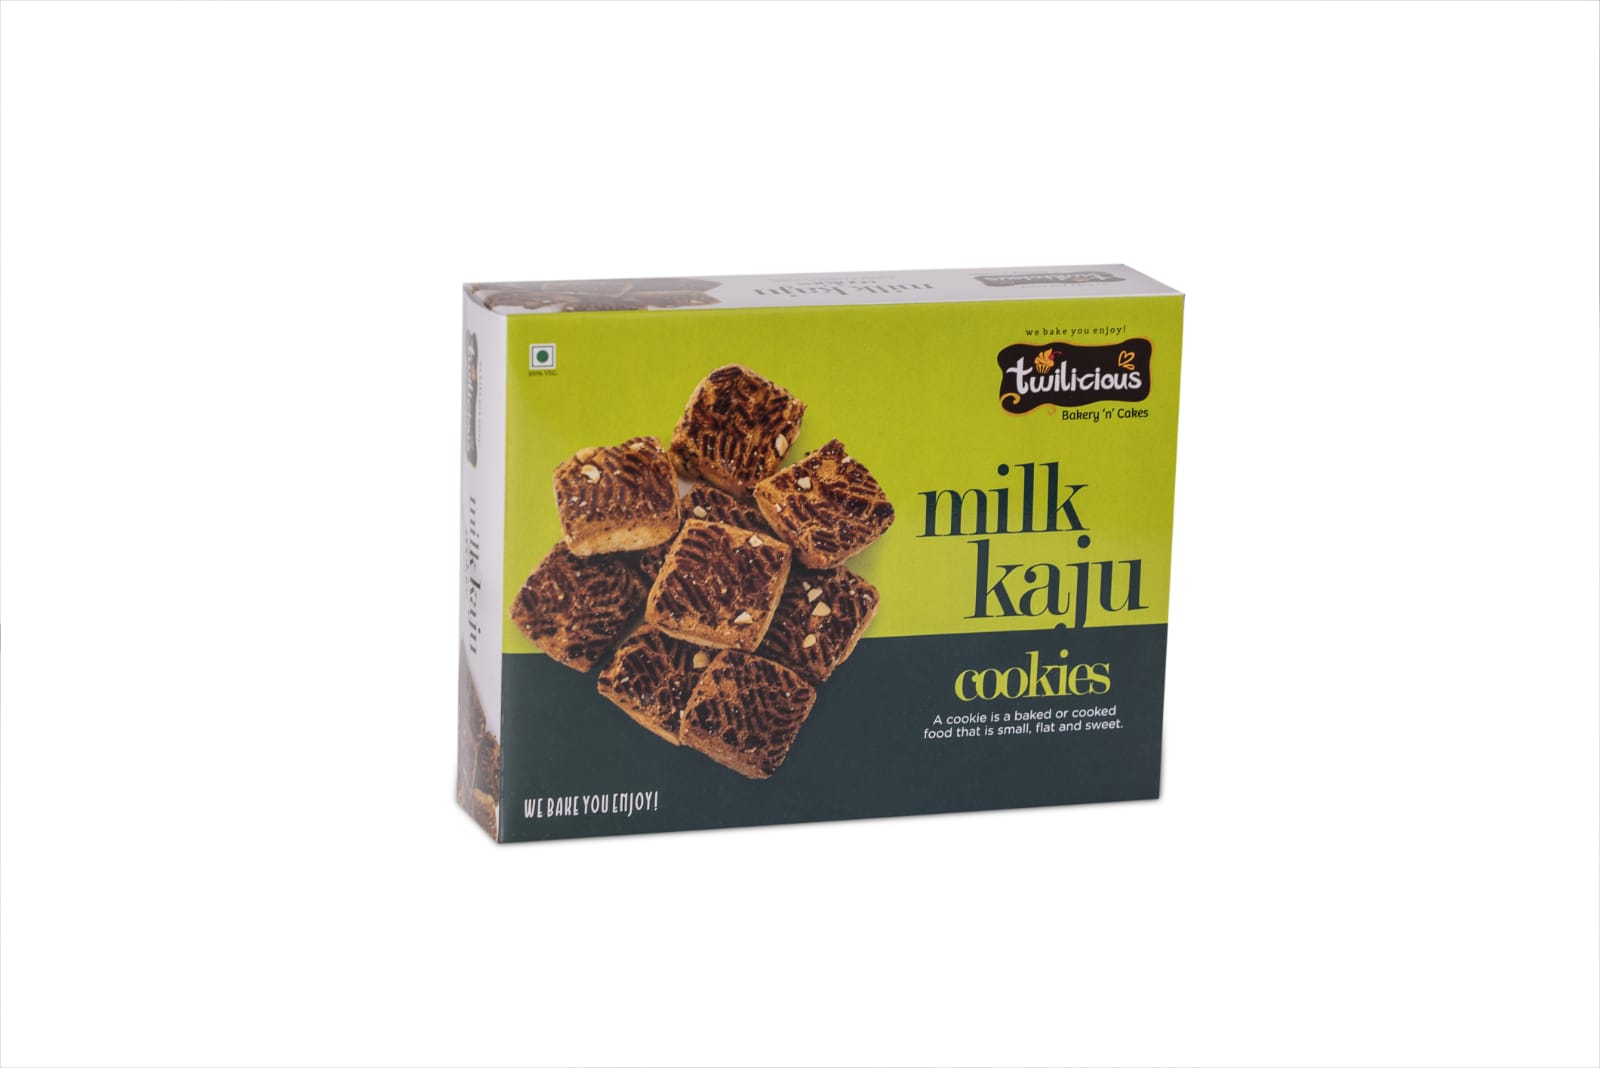 Twilicious Milk Kaju Cookies